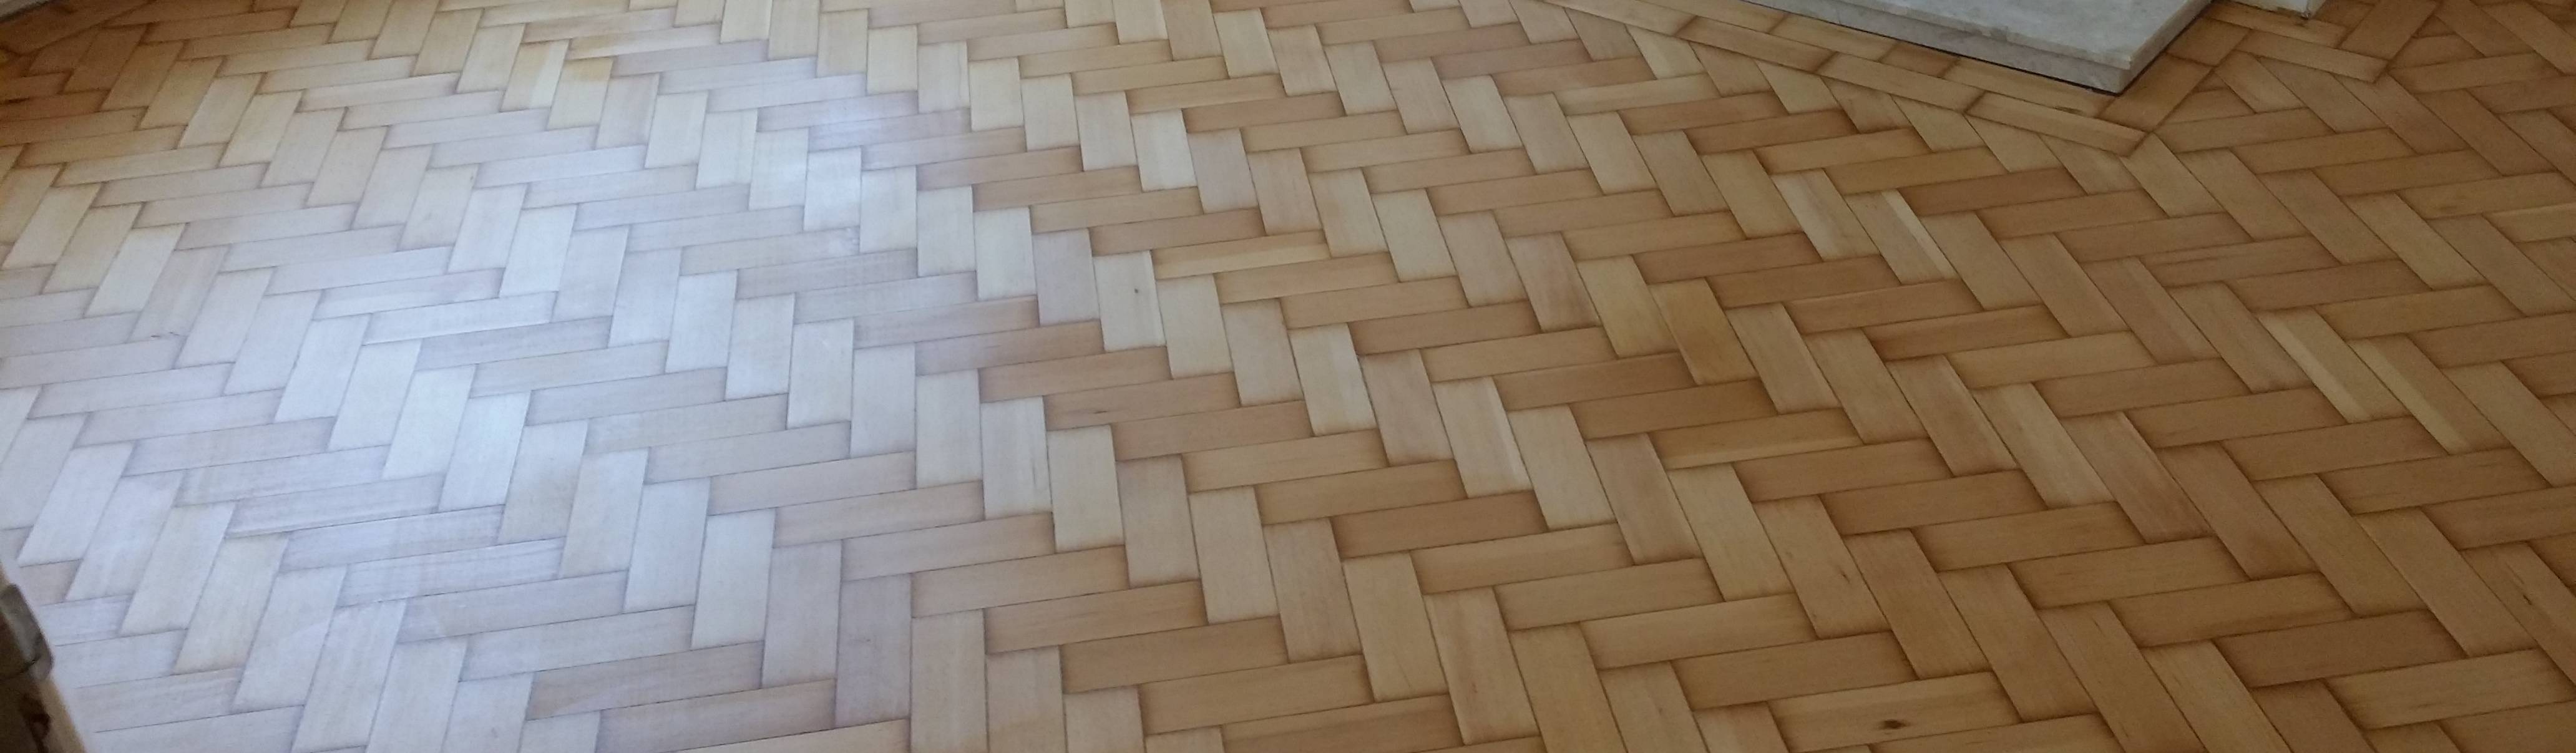 Parquet Floor Restoration - Sanding